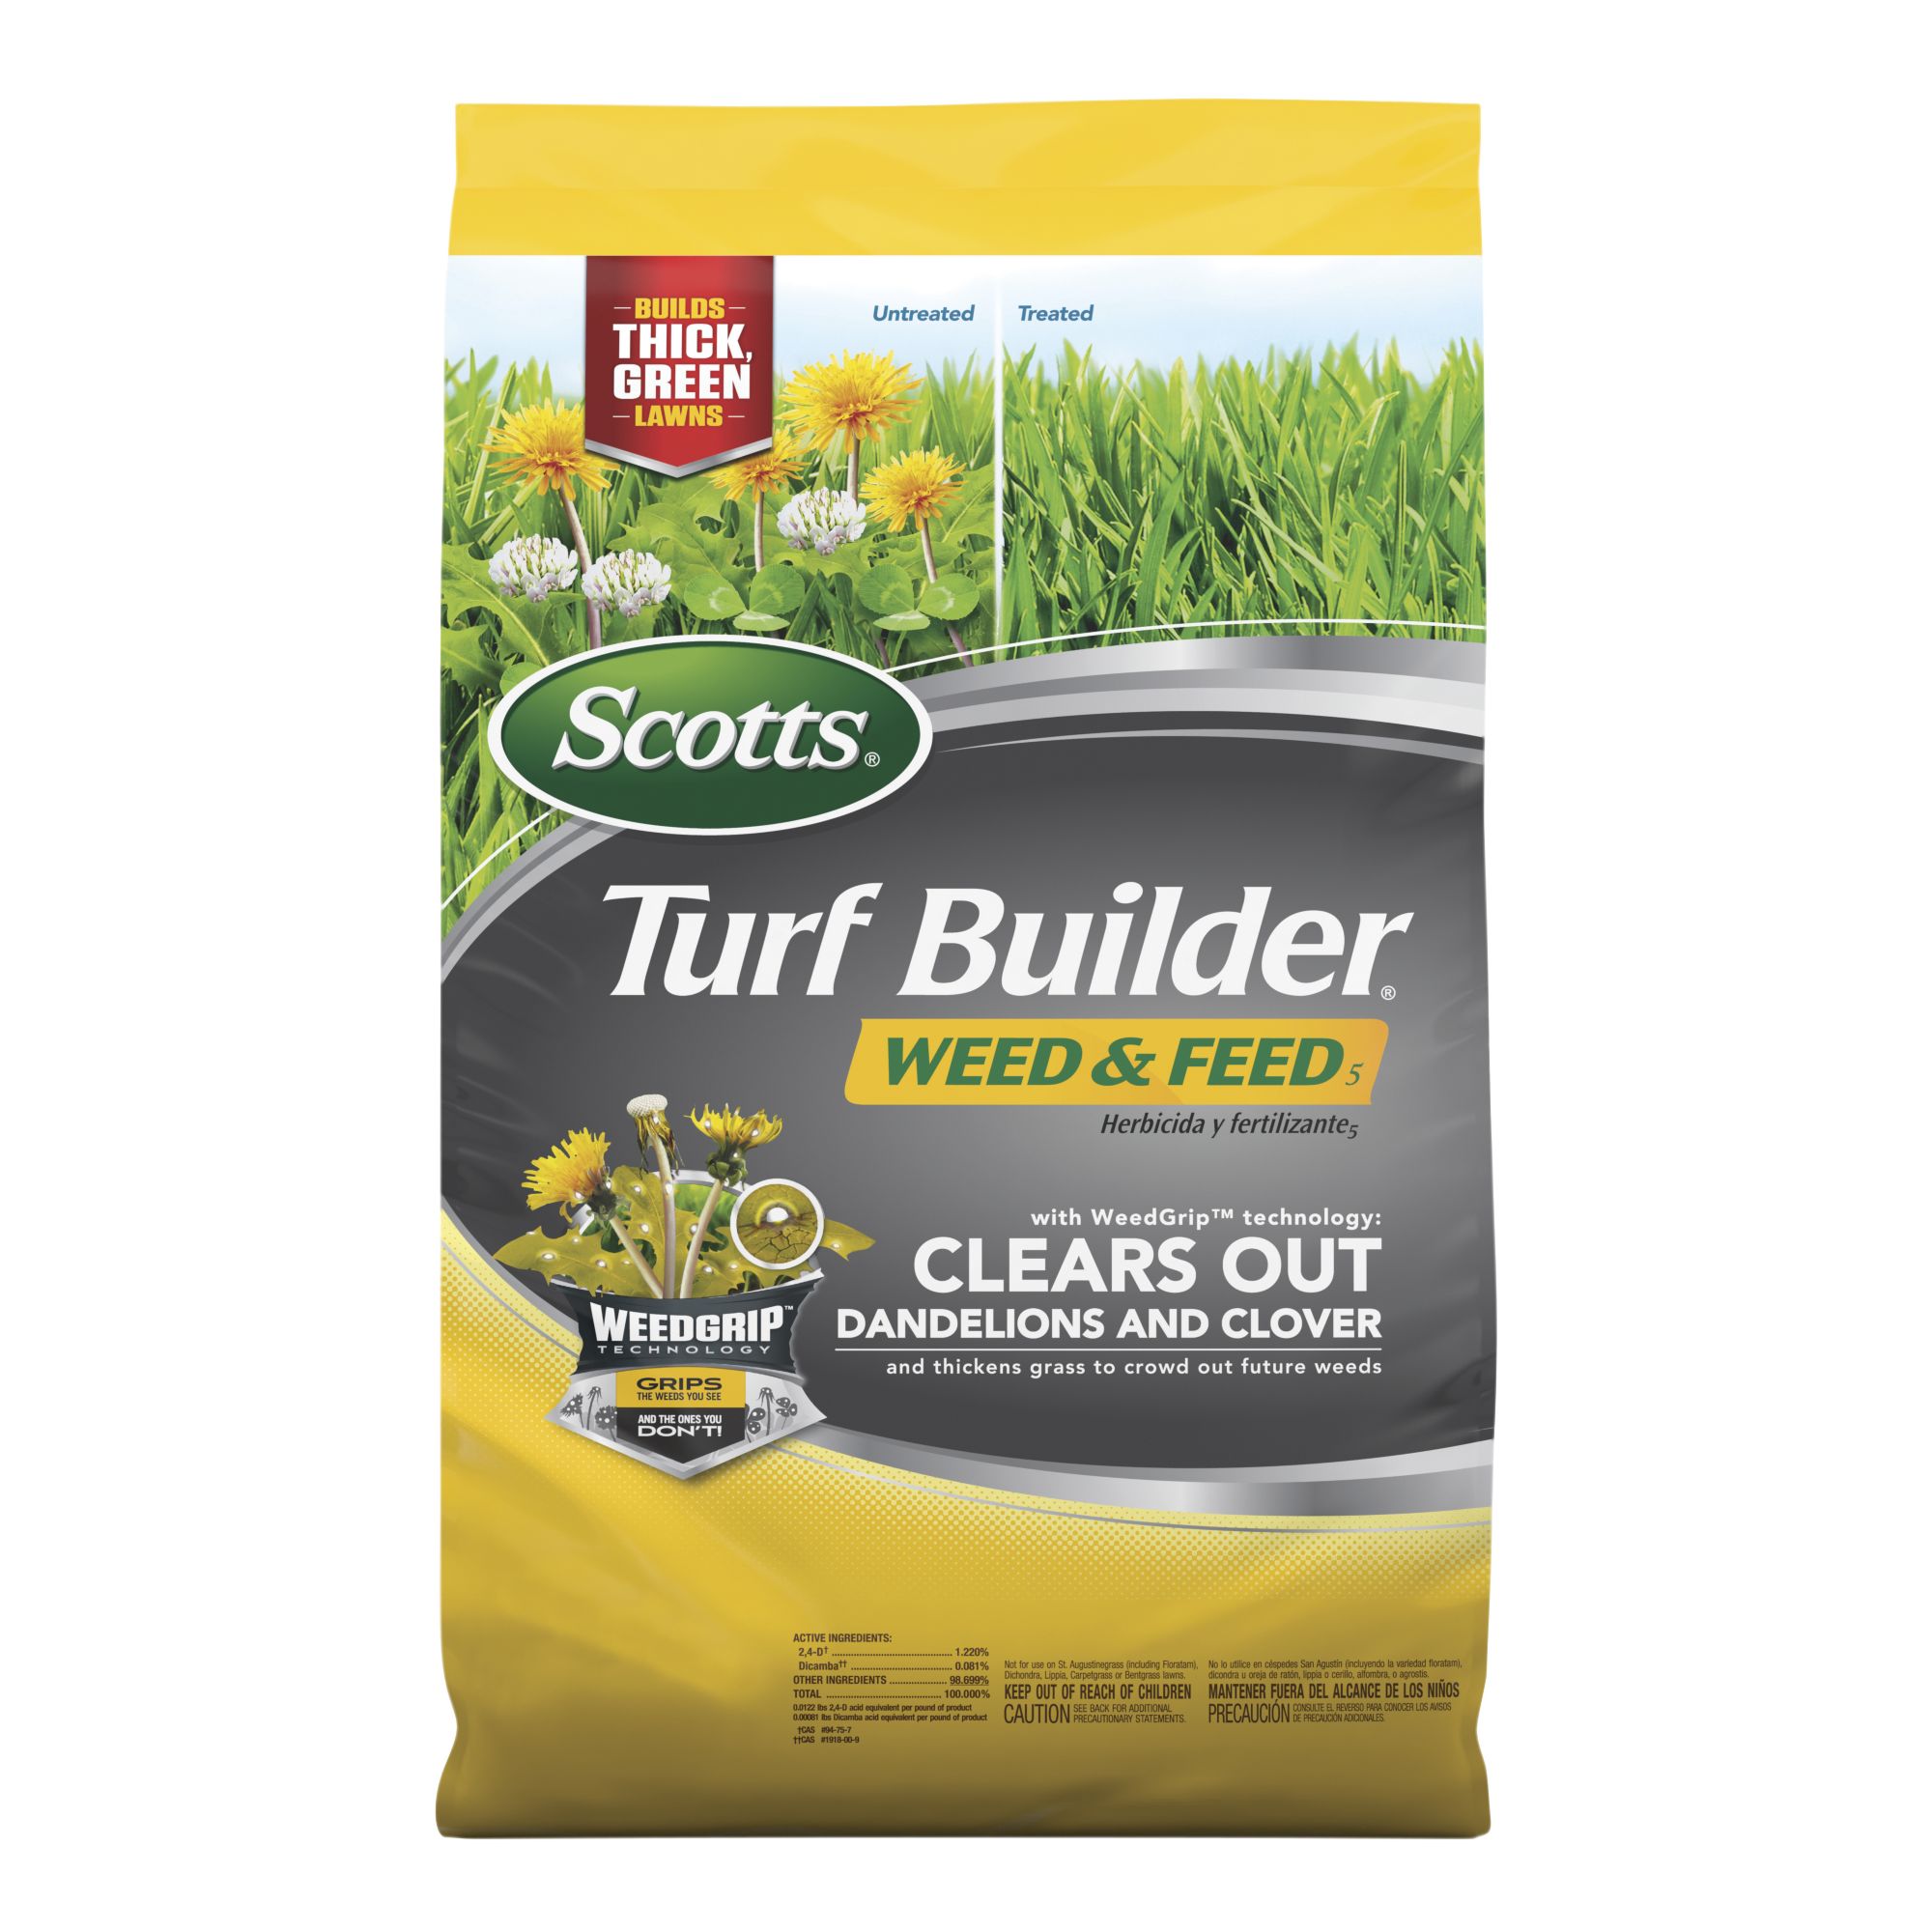 Scotts Turf Builder Weed & Feed, 45.26 lbs.